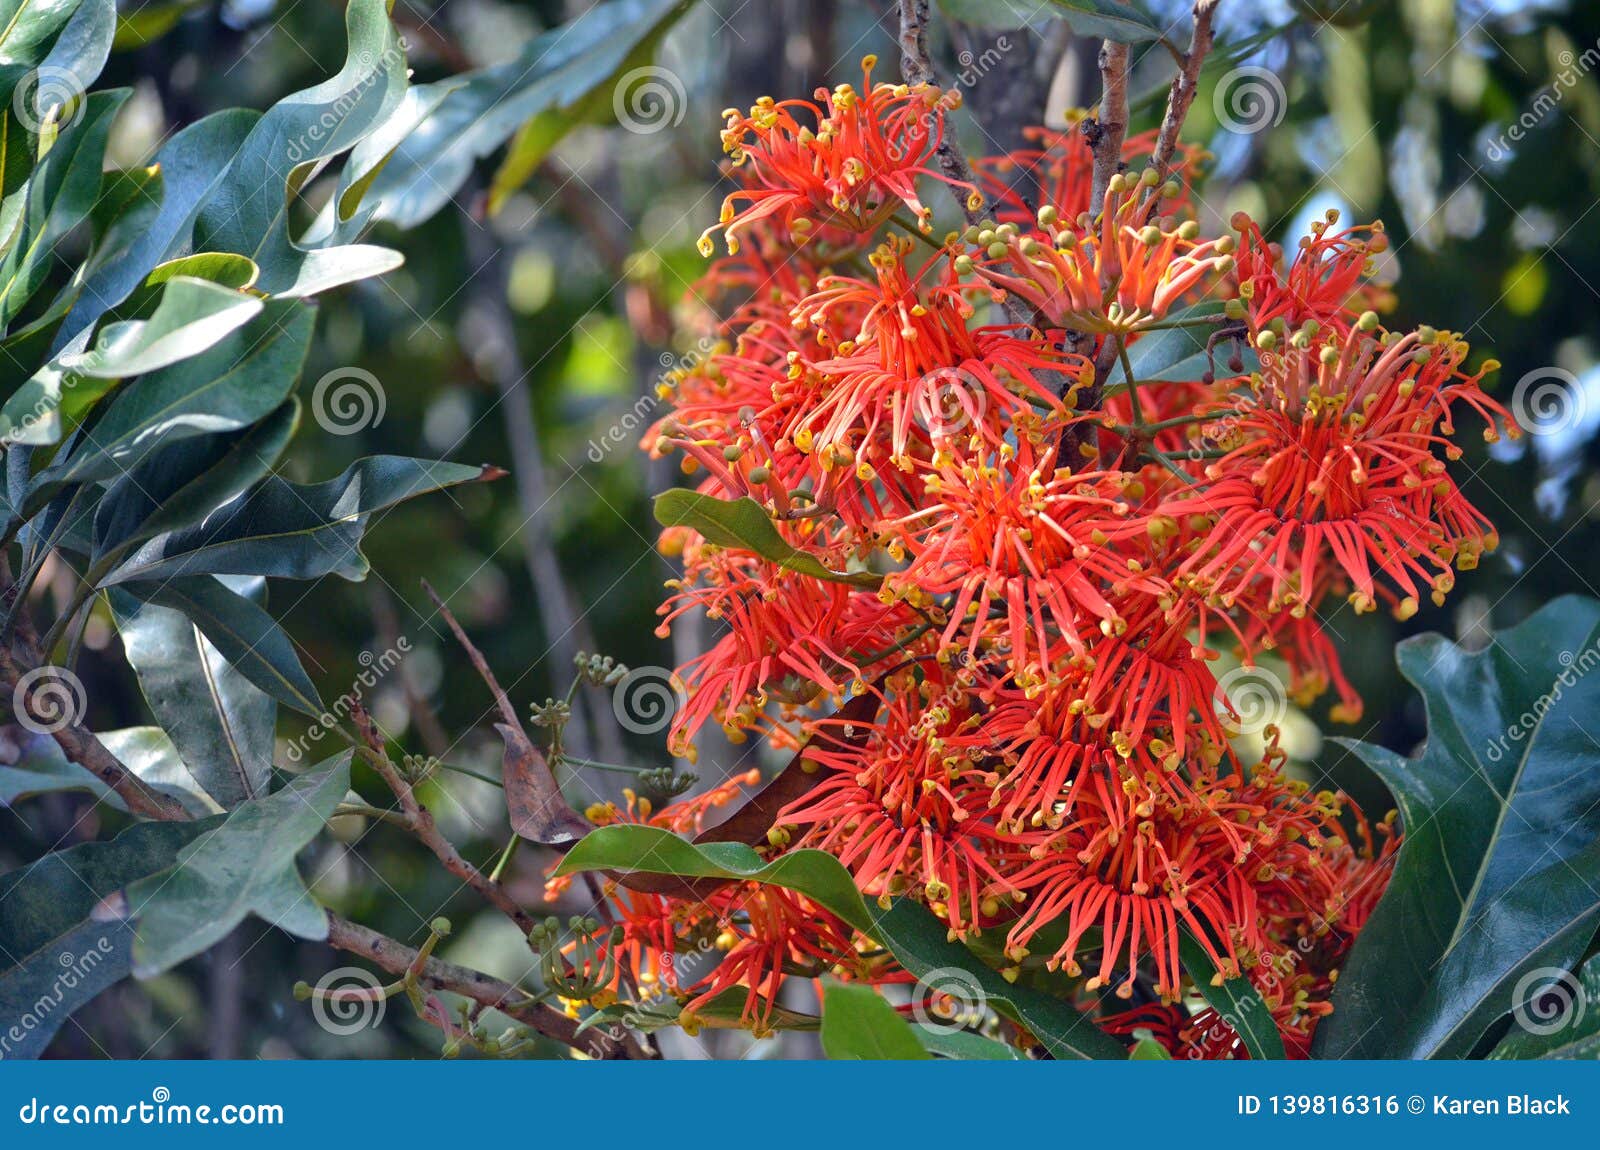  Orange  Flowers  Of The Australian  Native Firewheel Tree  